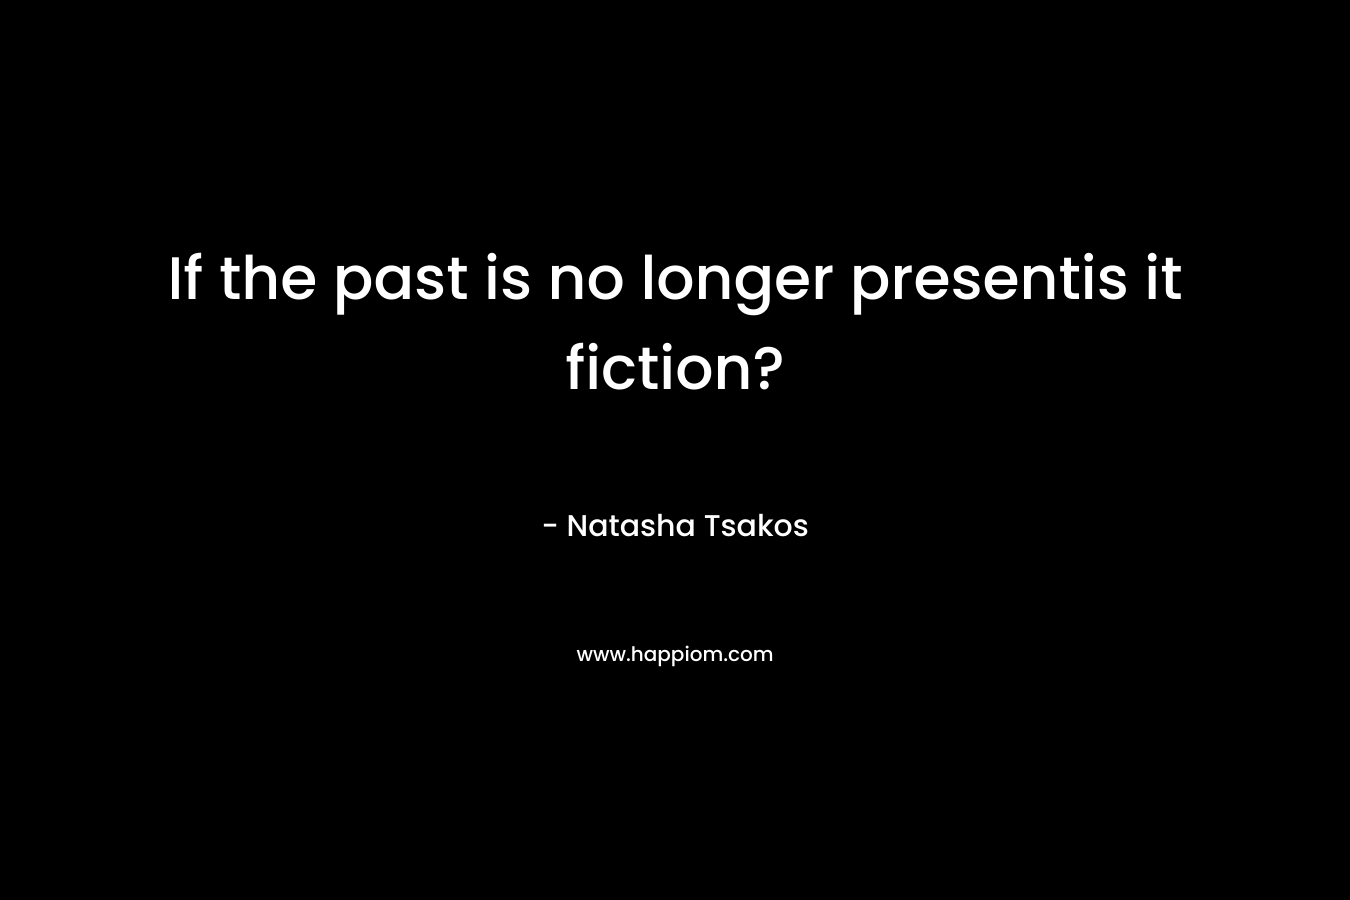 If the past is no longer presentis it fiction?